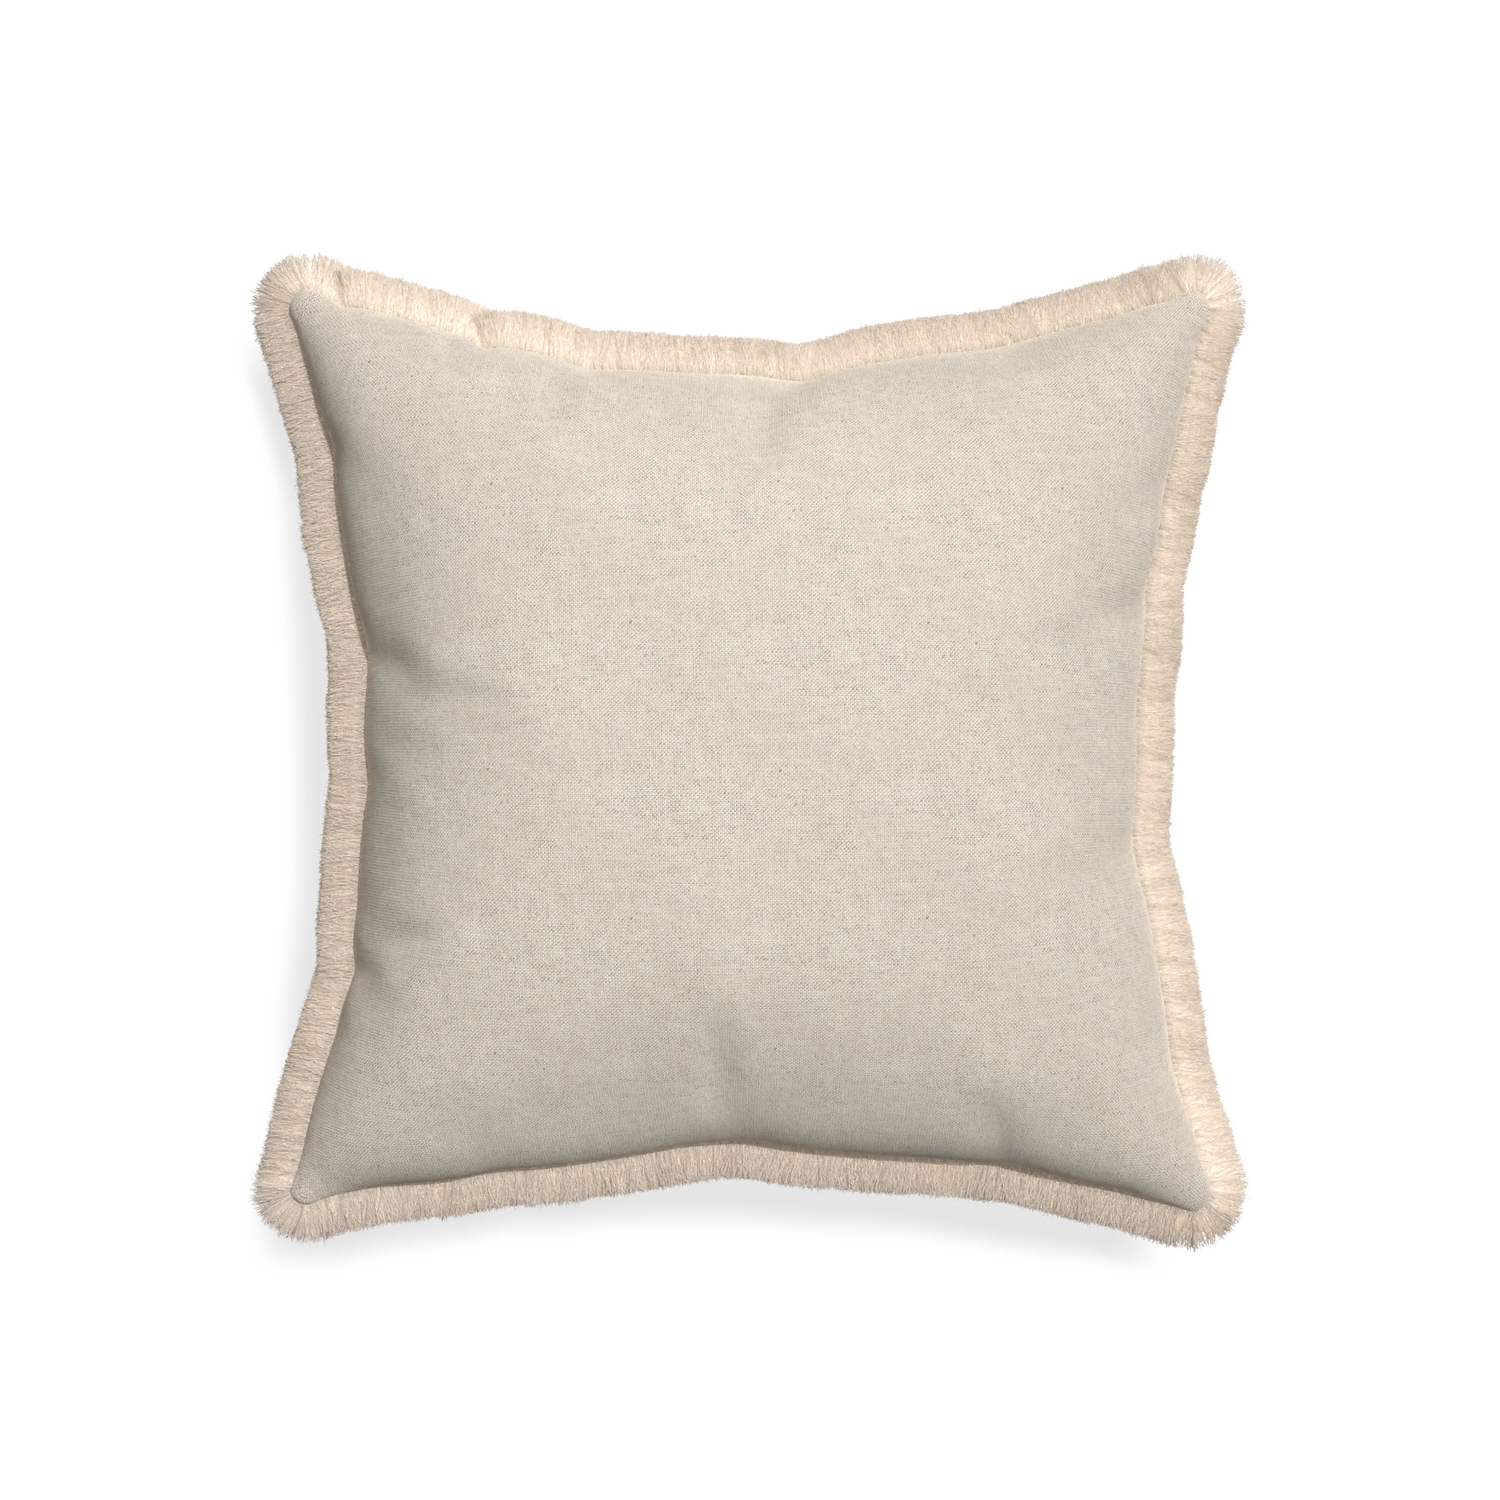 20-square oat custom pillow with cream fringe on white background